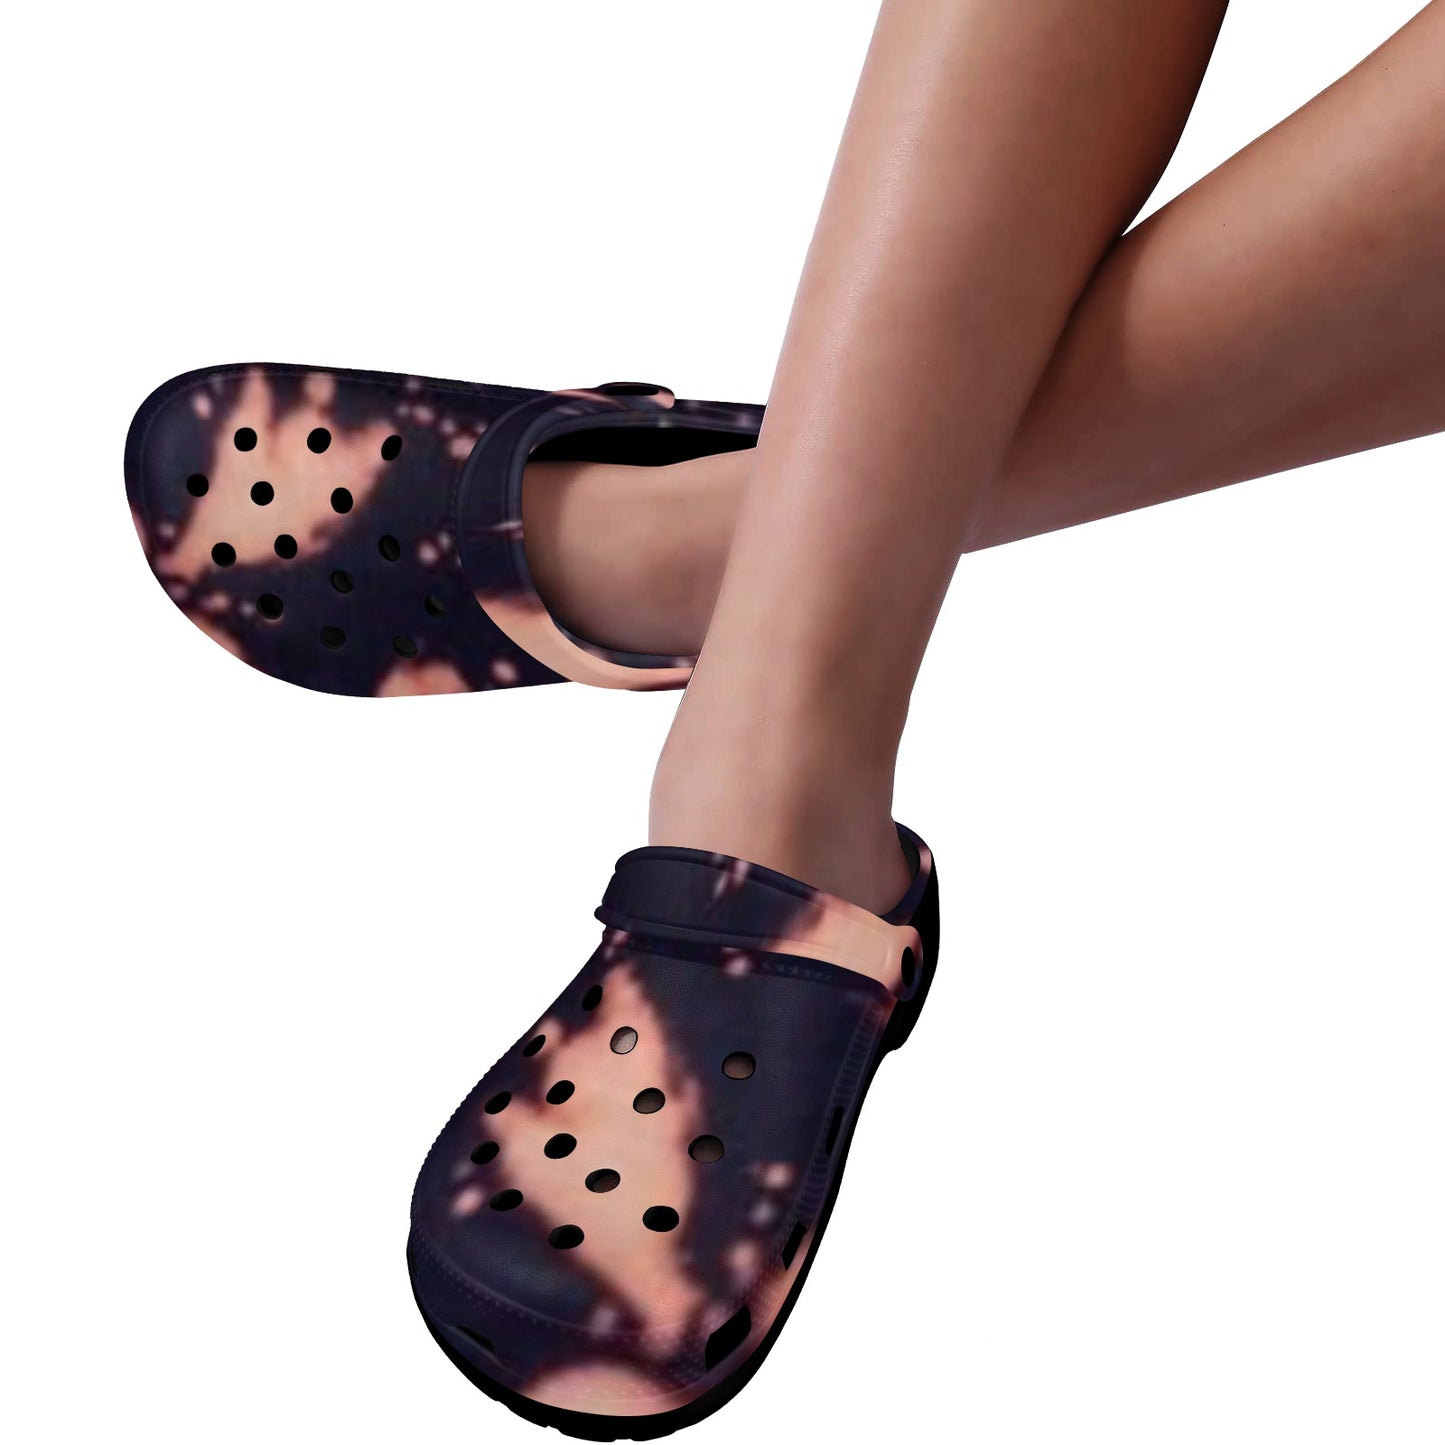 fz unisex sandals - abstract 2 custom print adults clogs